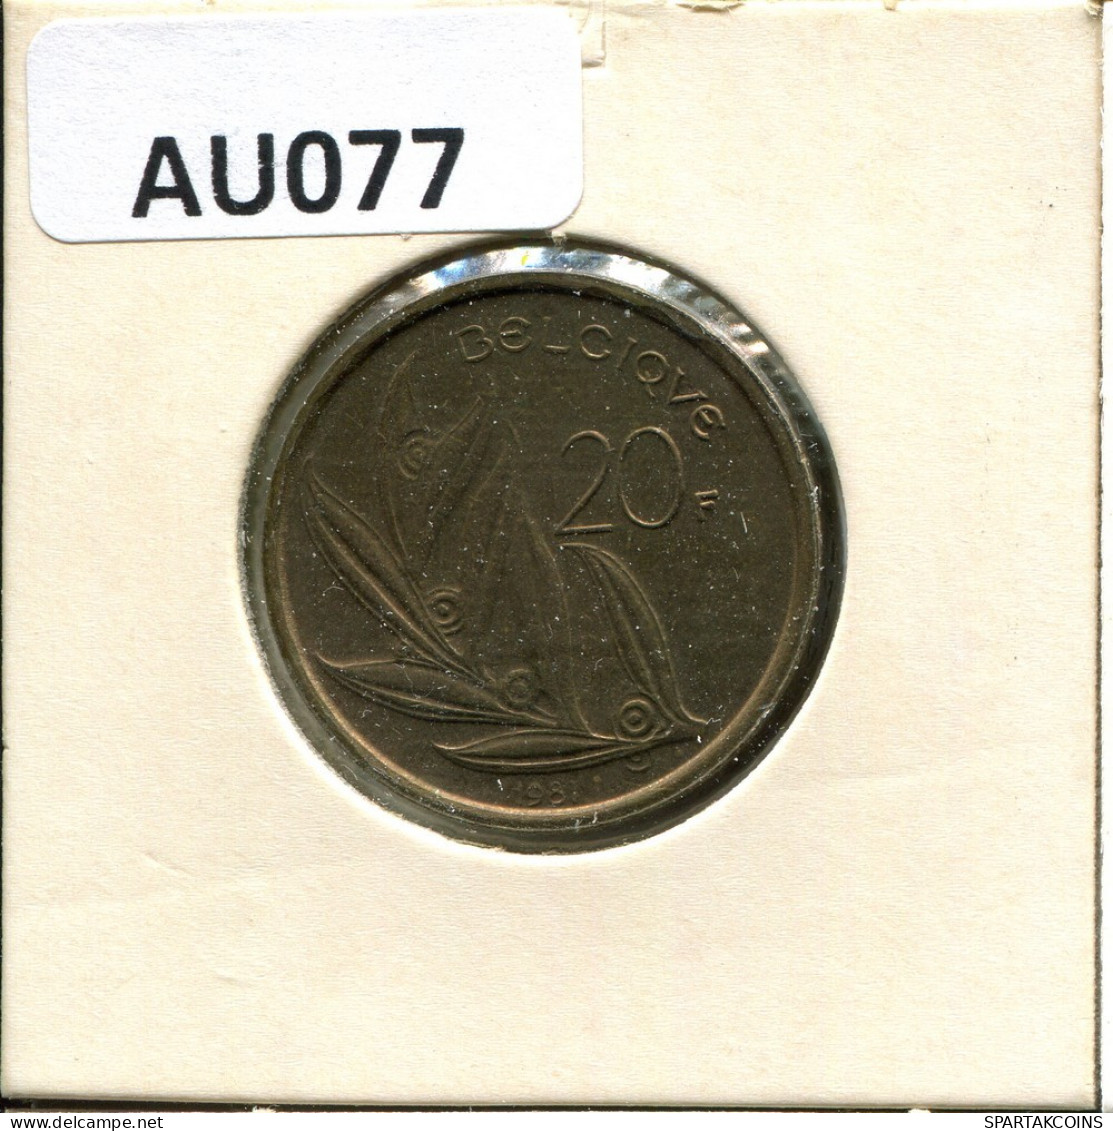 20 FRANCS 1981 FRENCH Text BELGIUM Coin #AU077.U.A - 20 Frank